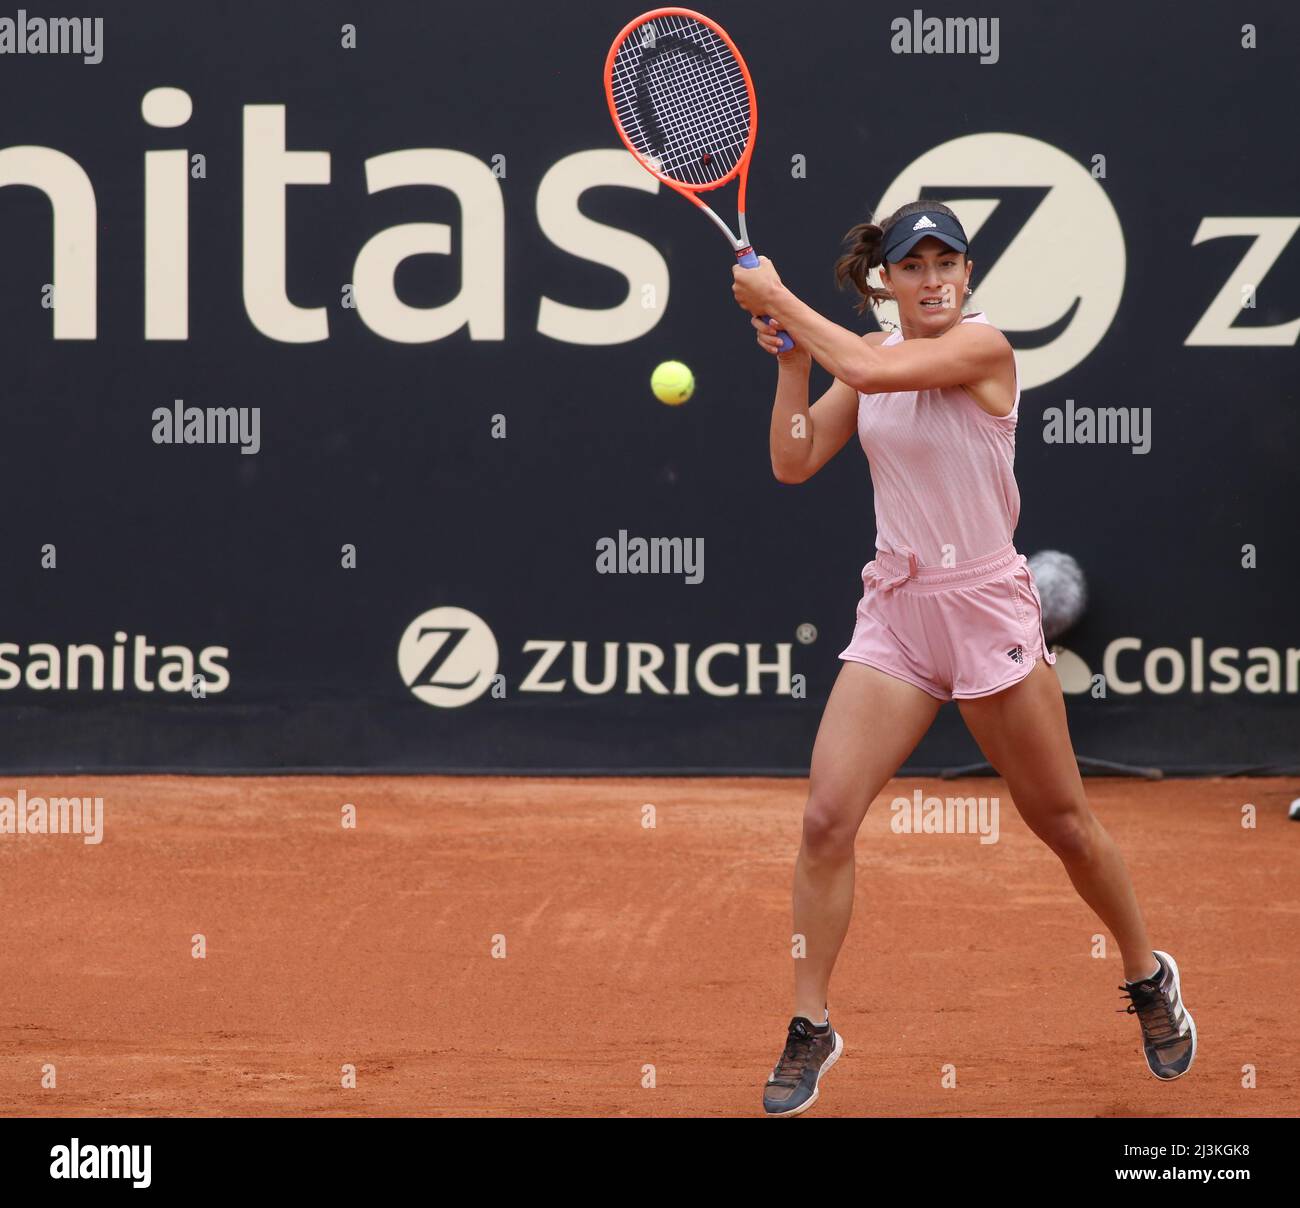 Tennis: Qualifier Osorio stuns Garcia at Italian Open - Omni sports -  Sports - Ahram Online